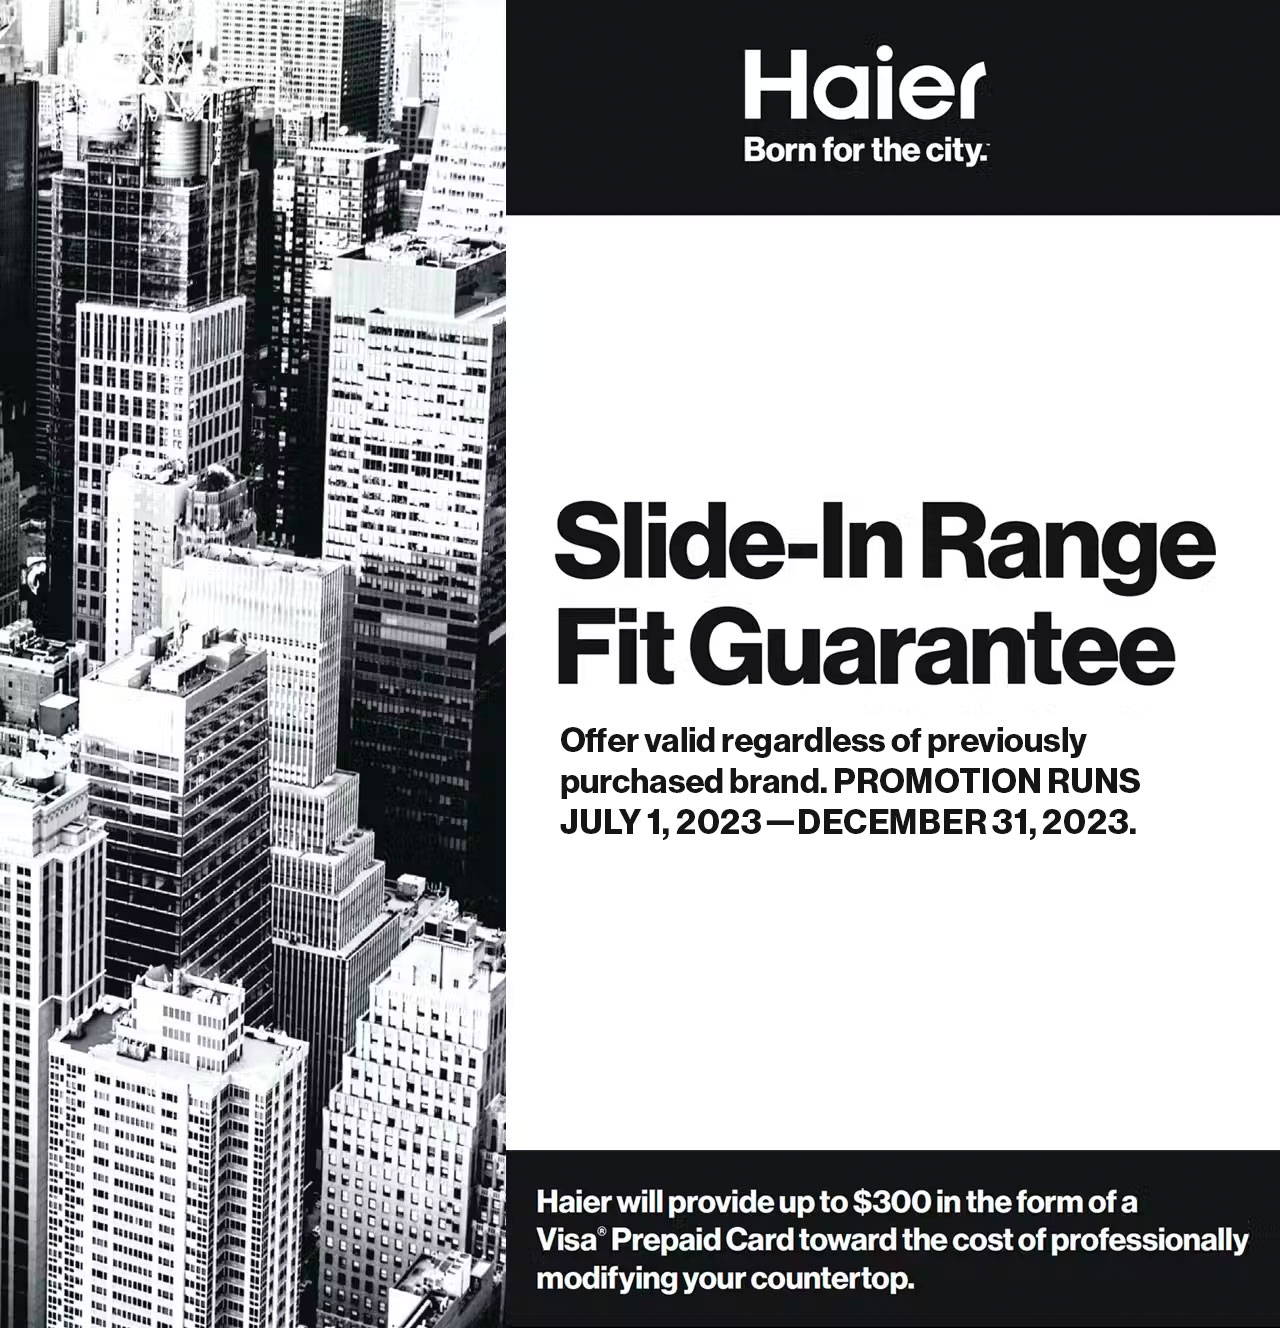 Haier Slide-In Range Fit Guarantee